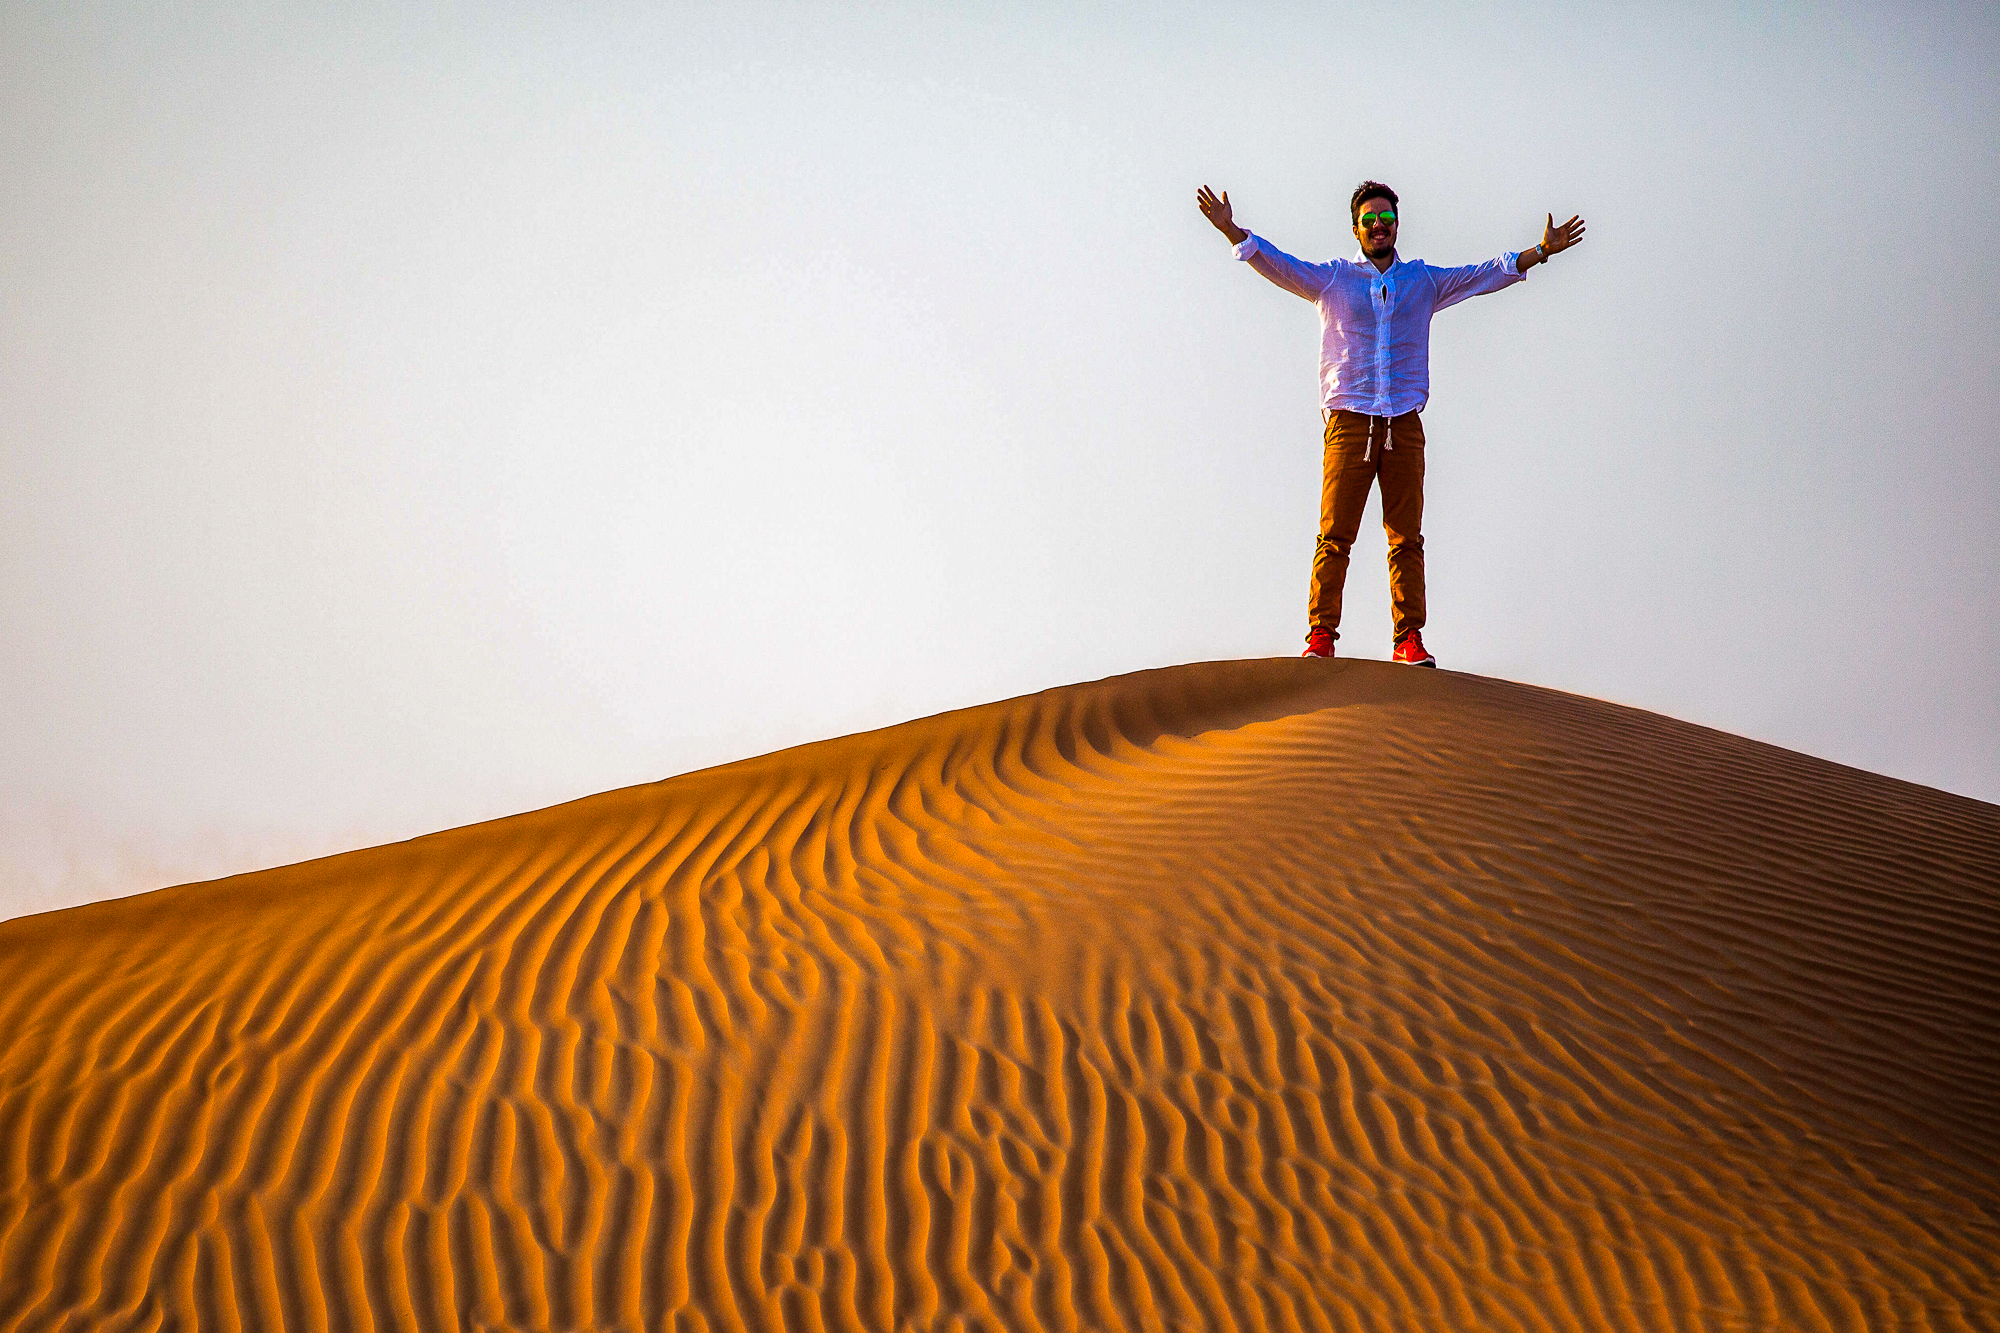 The Dubai desert and the sense of freedom!...